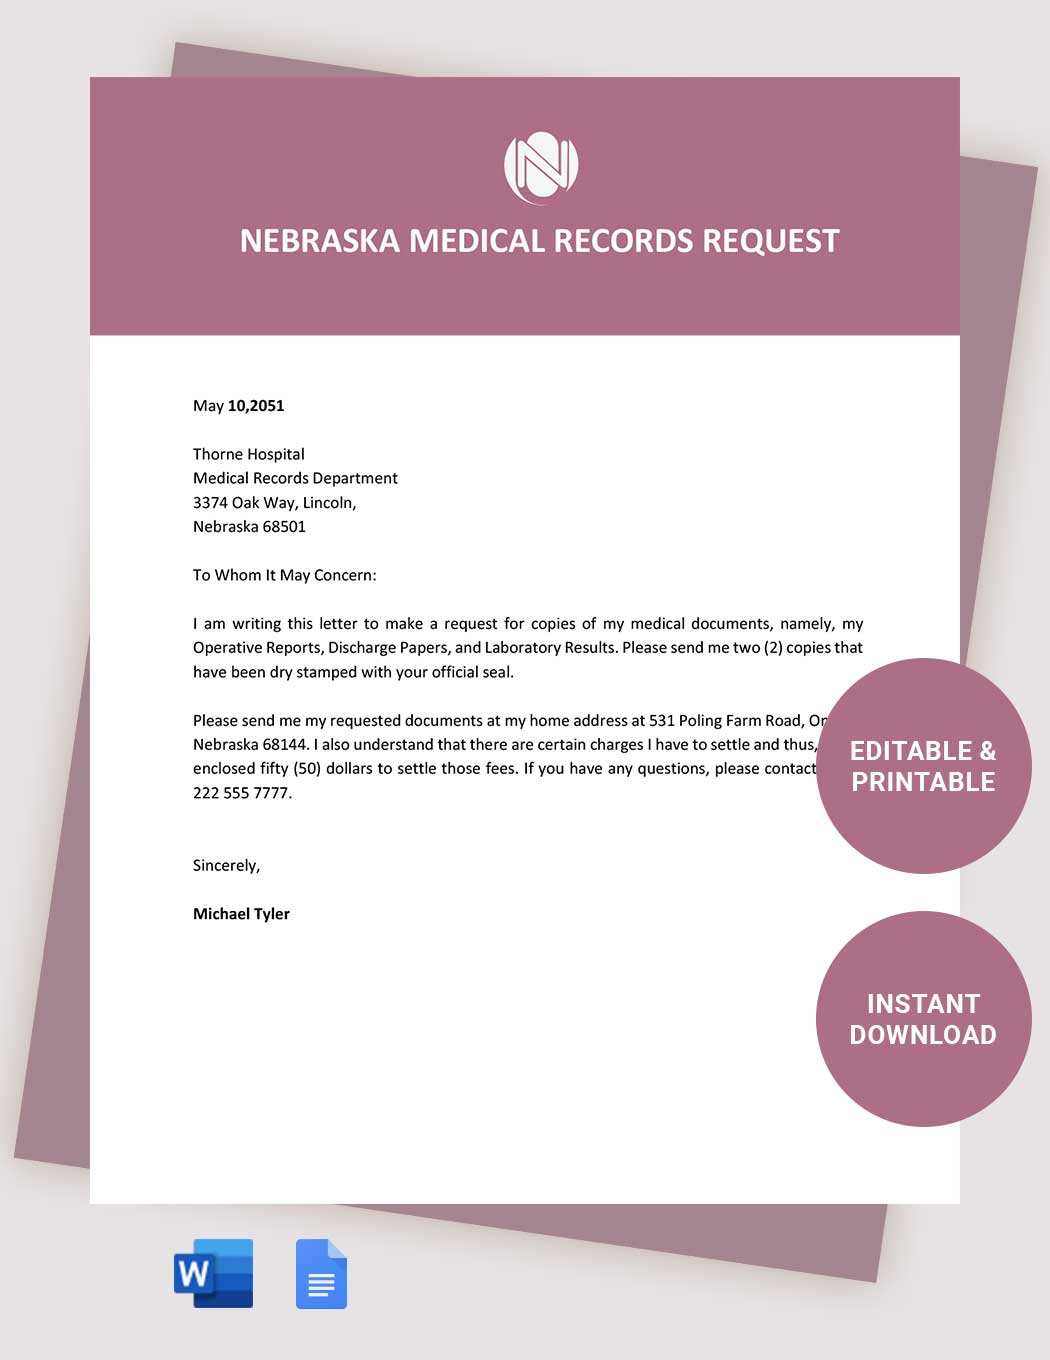 Nebraska Medical Records Request Template in Word, Google Docs